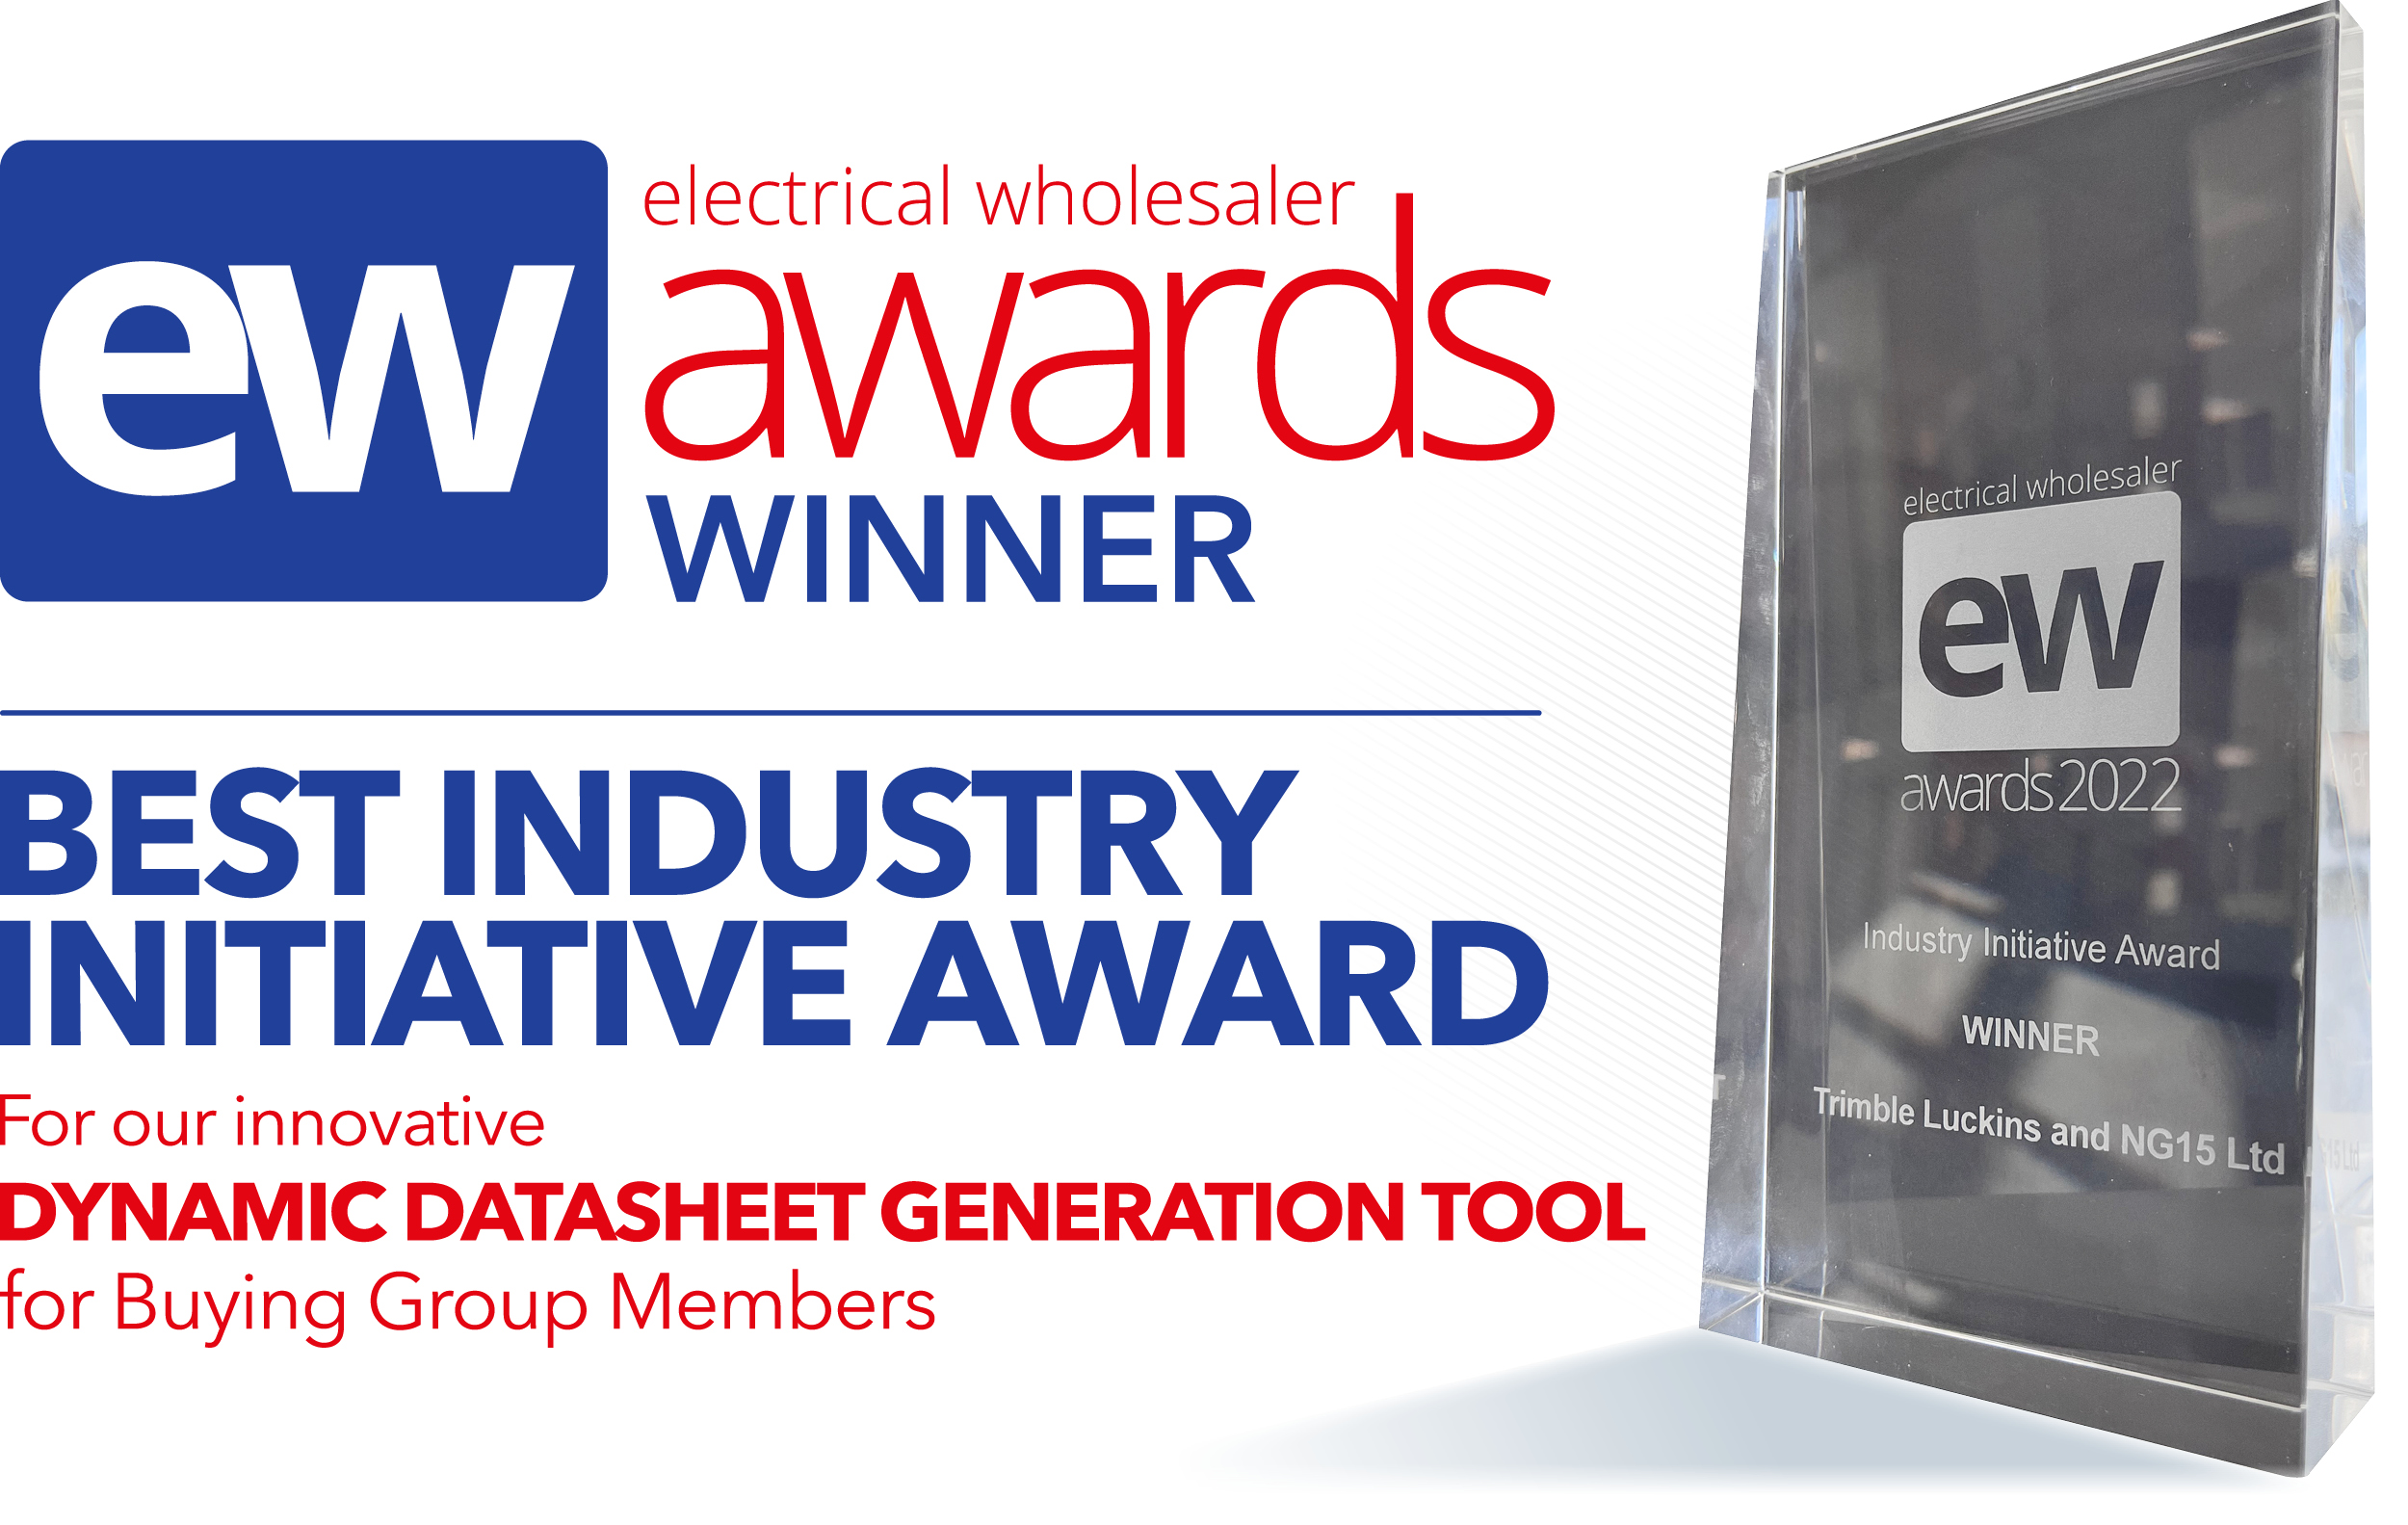 ew Award for Best Industry Initiative